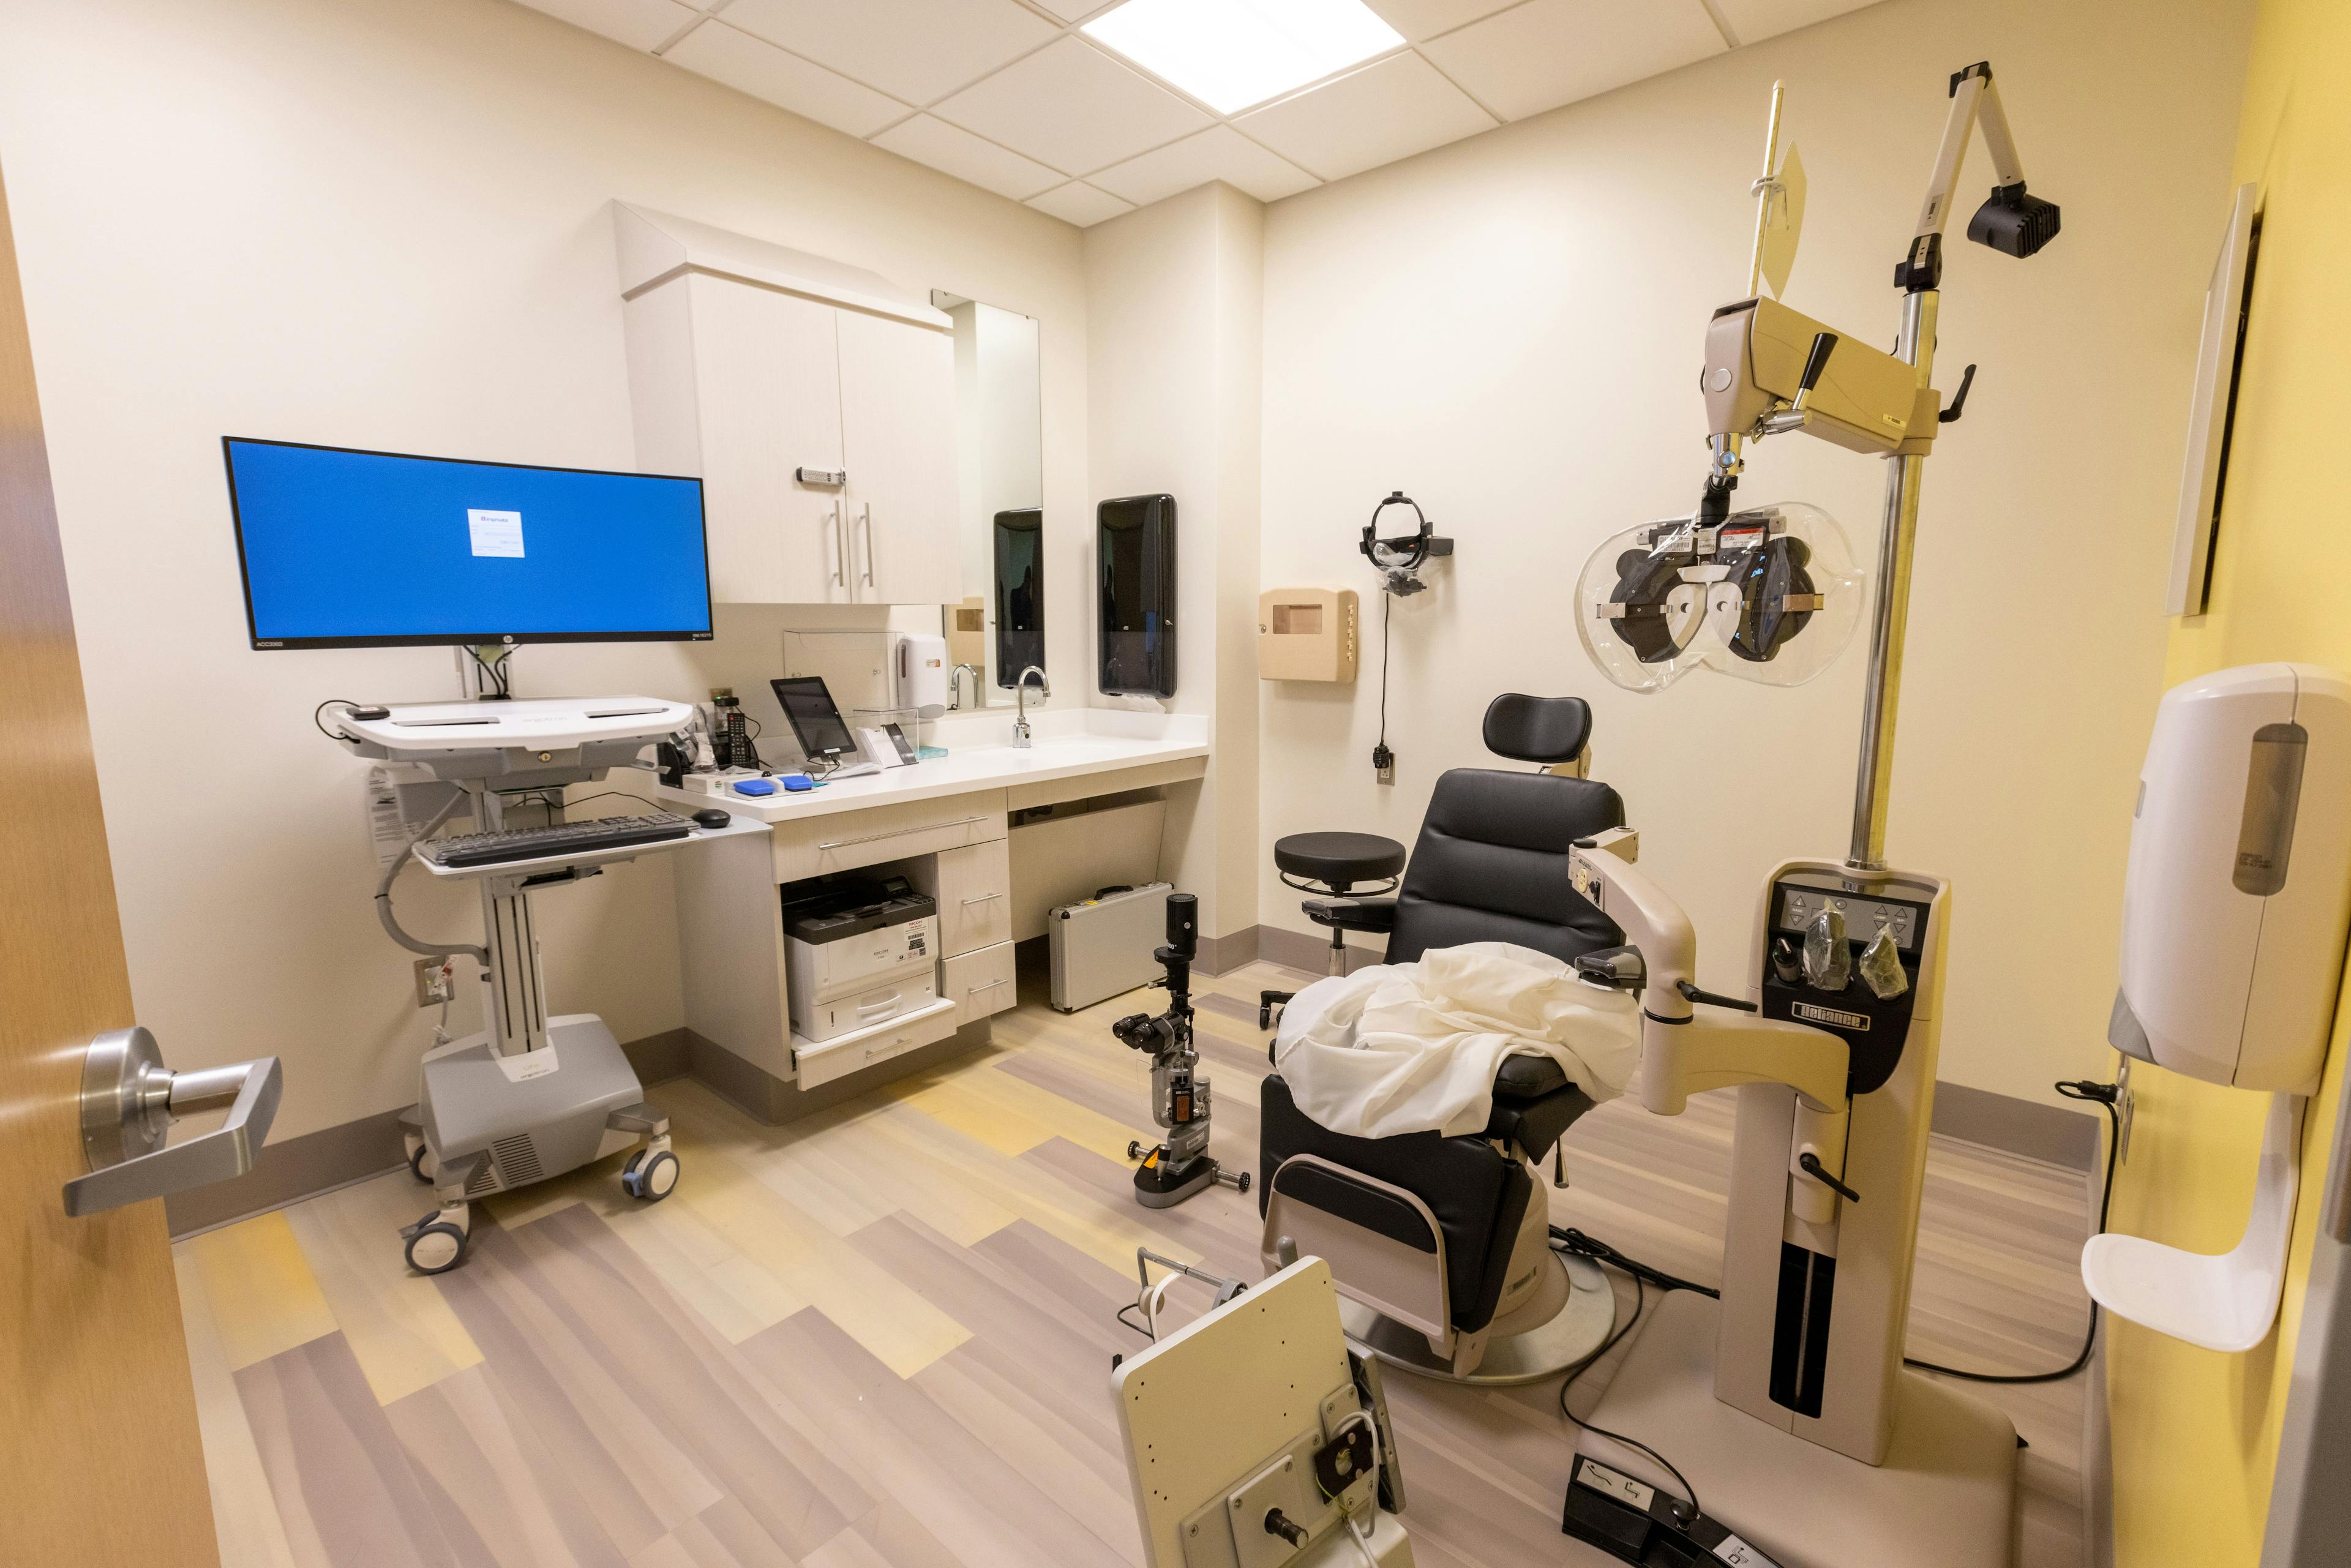 The Ernest E. Tschannen Eye Institute contains 64 examination rooms. (Photos courtesy of UC Davis Health)